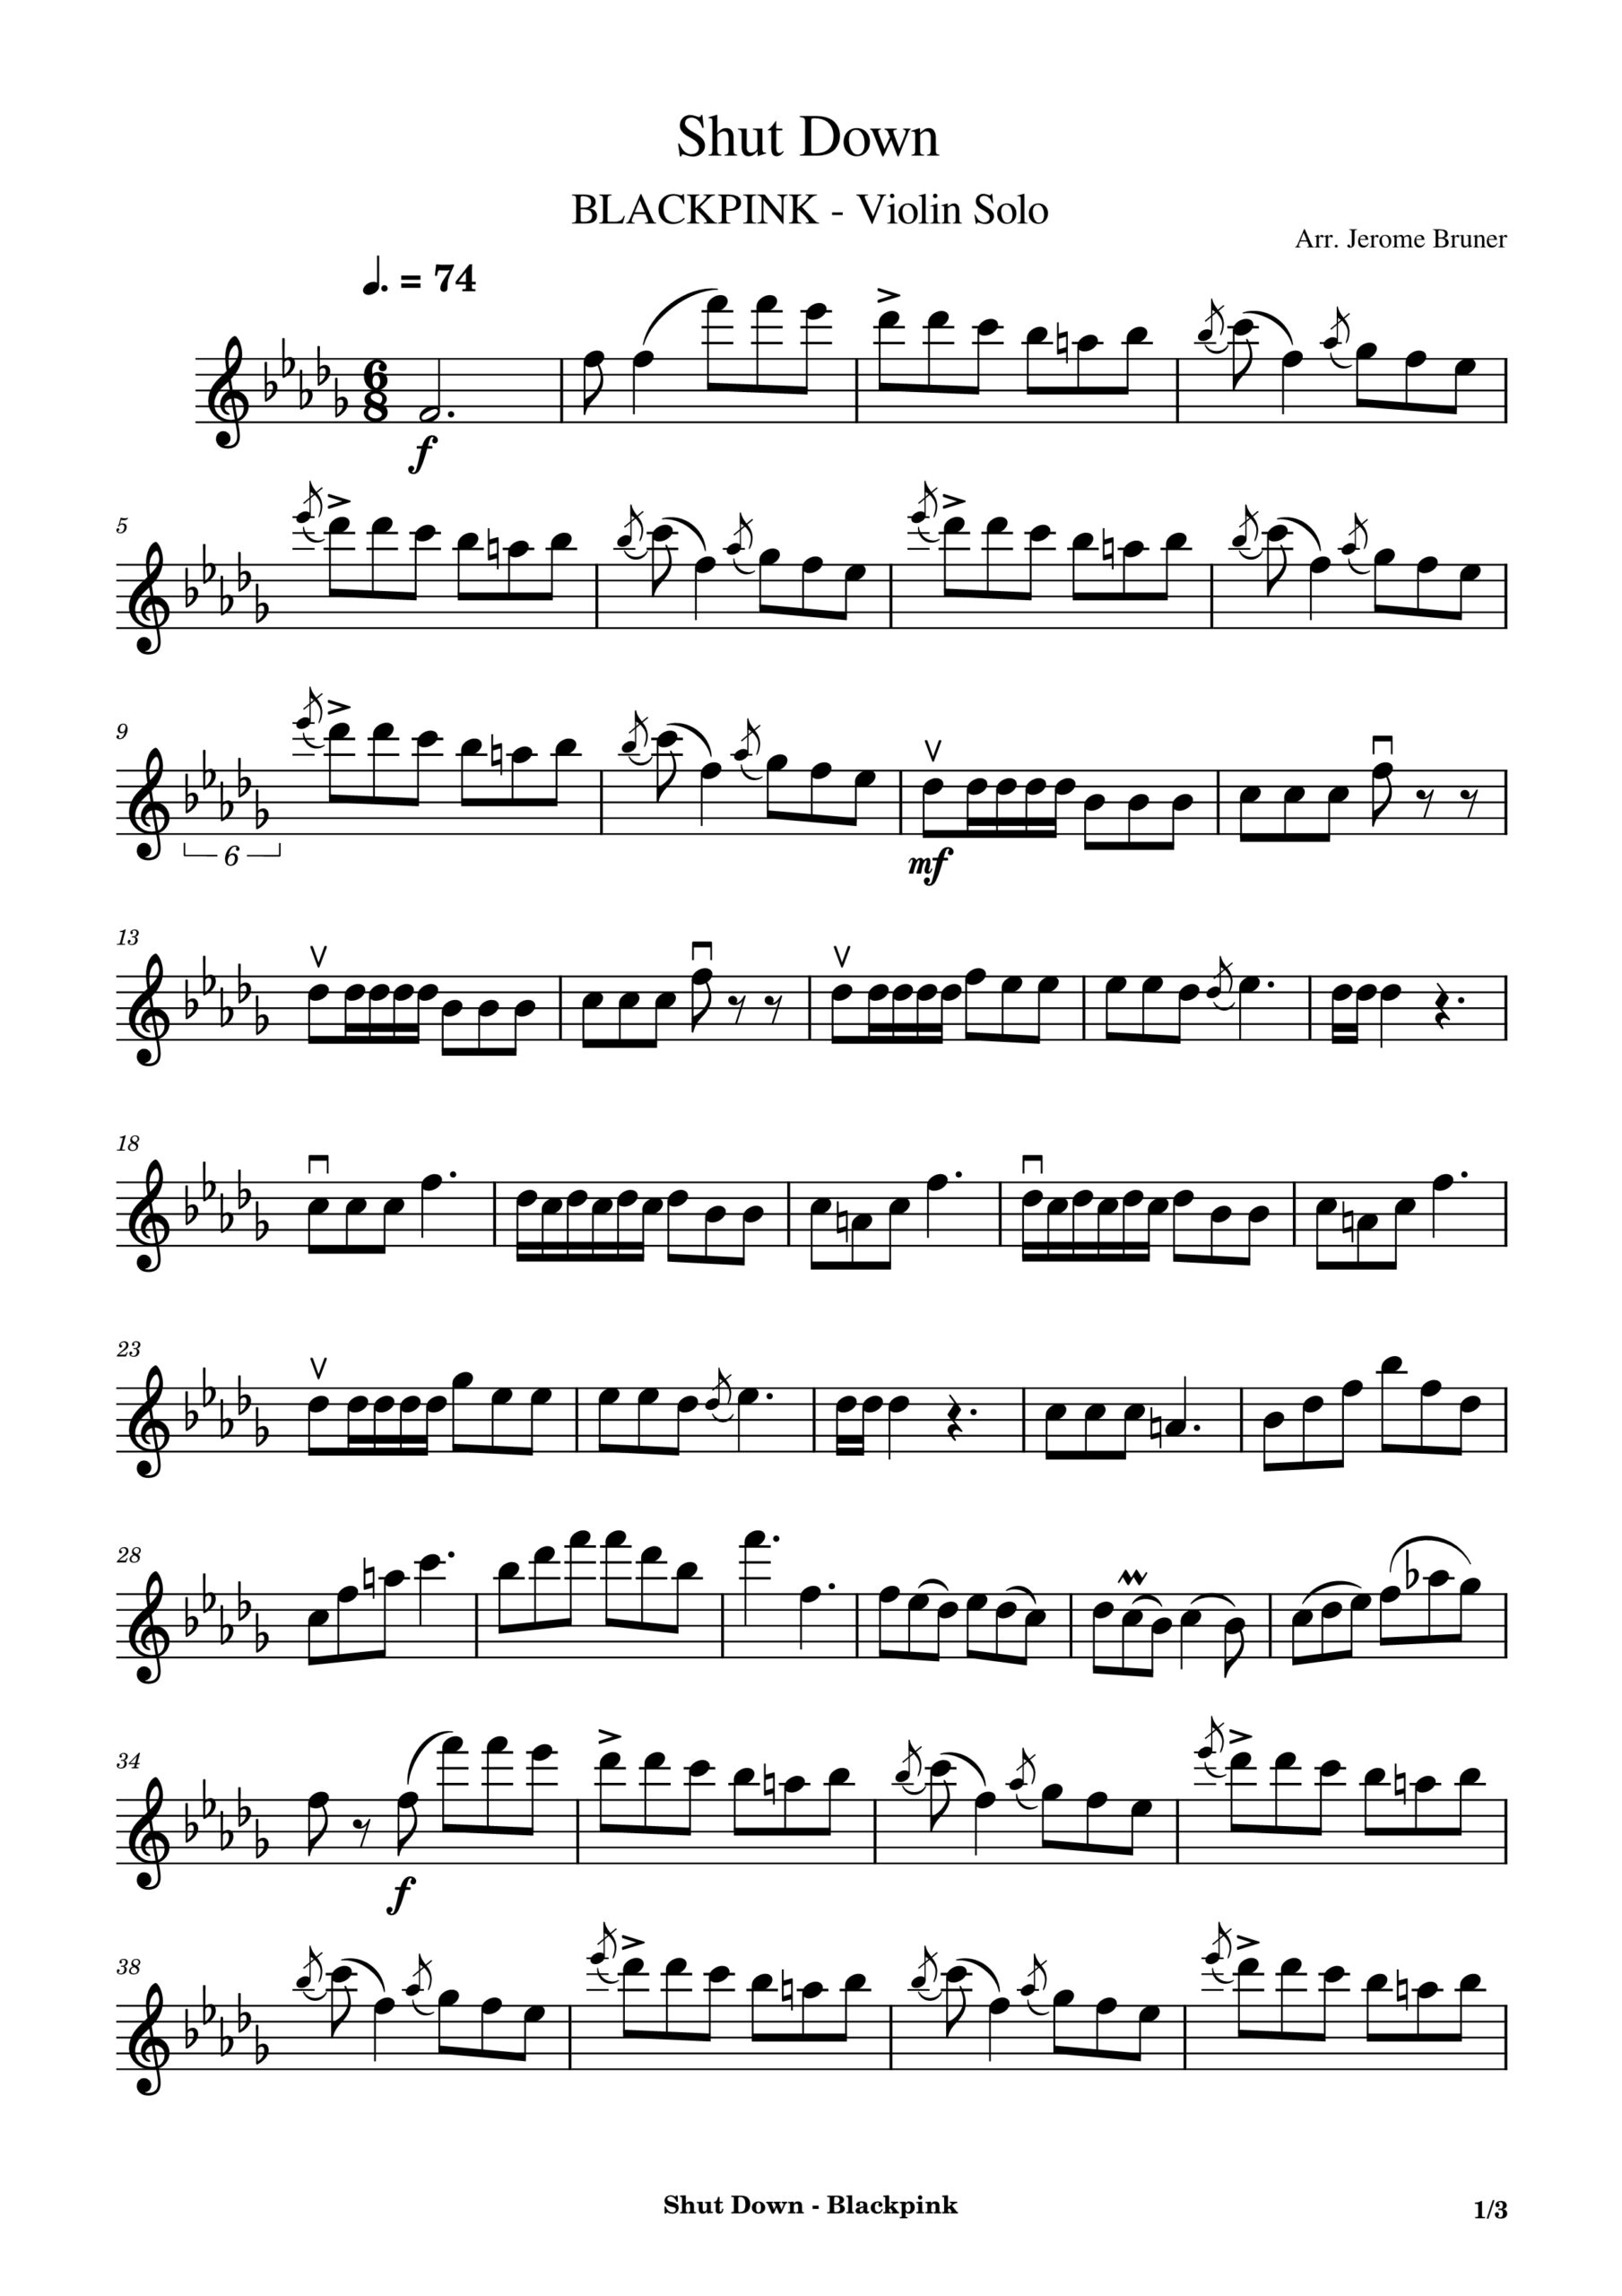 Blackpink, Shut Down Violin Solo Sheet Music Page 1 of 3